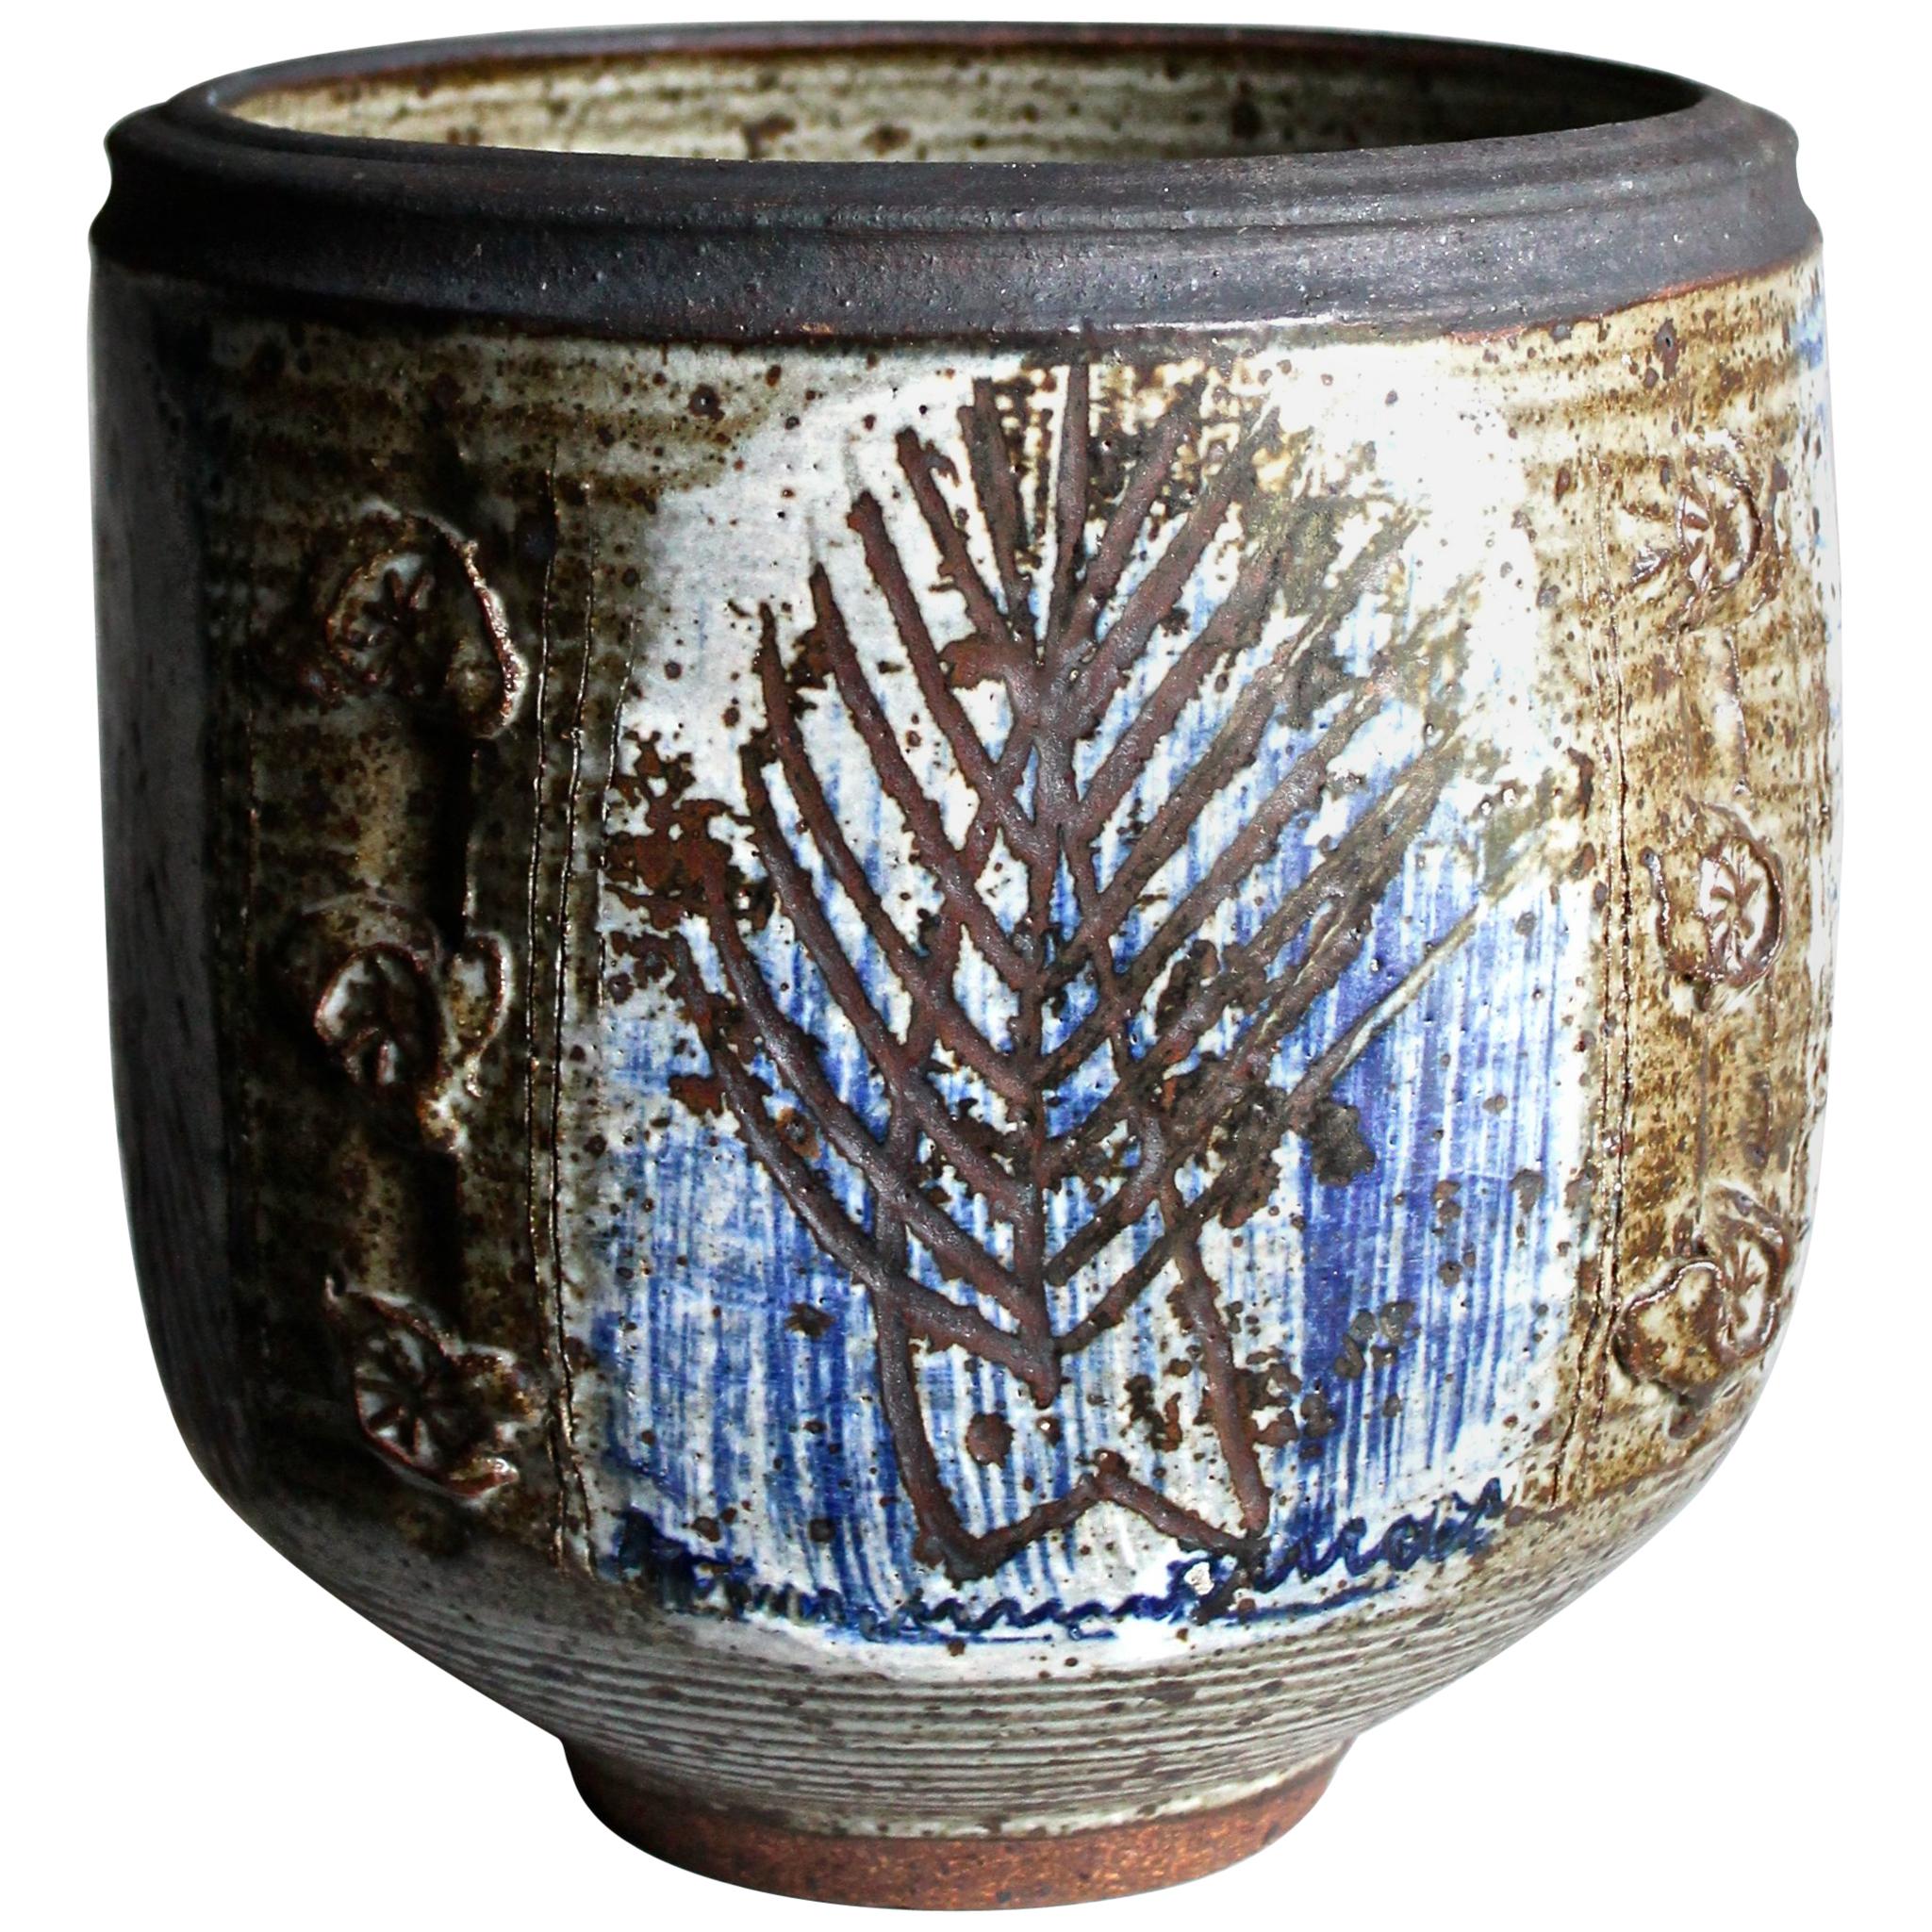 Viveka and Otto Heino Large Hand Thrown Ceramic Bowl